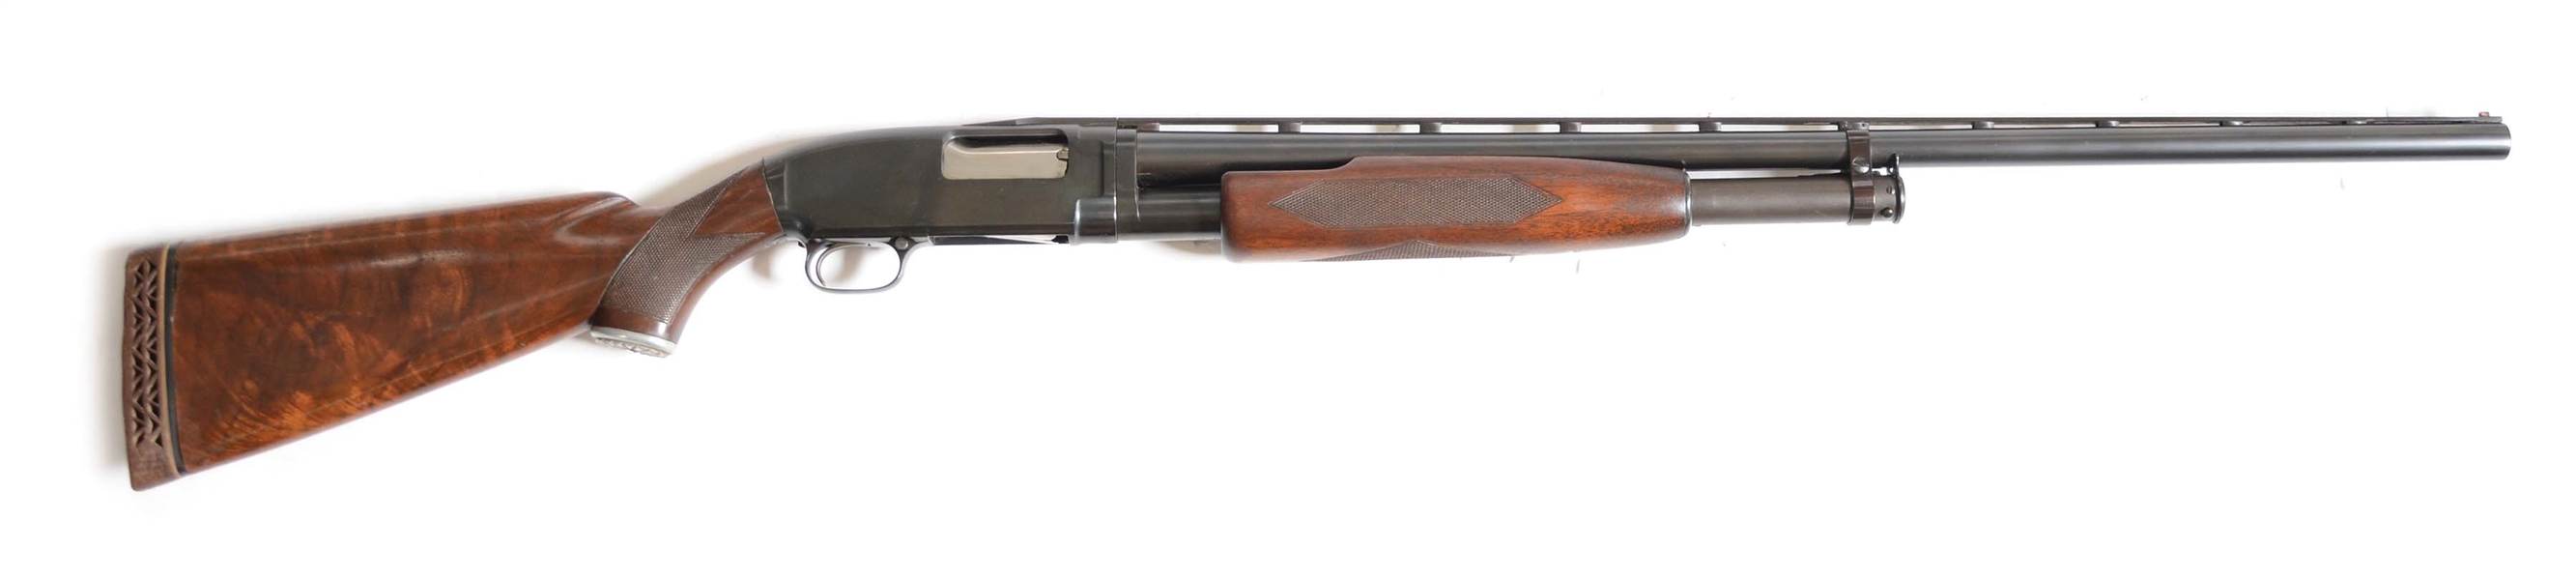 (C) WINCHESTER MODEL 12 12 BORE PUMP SHOTGUN (1955).